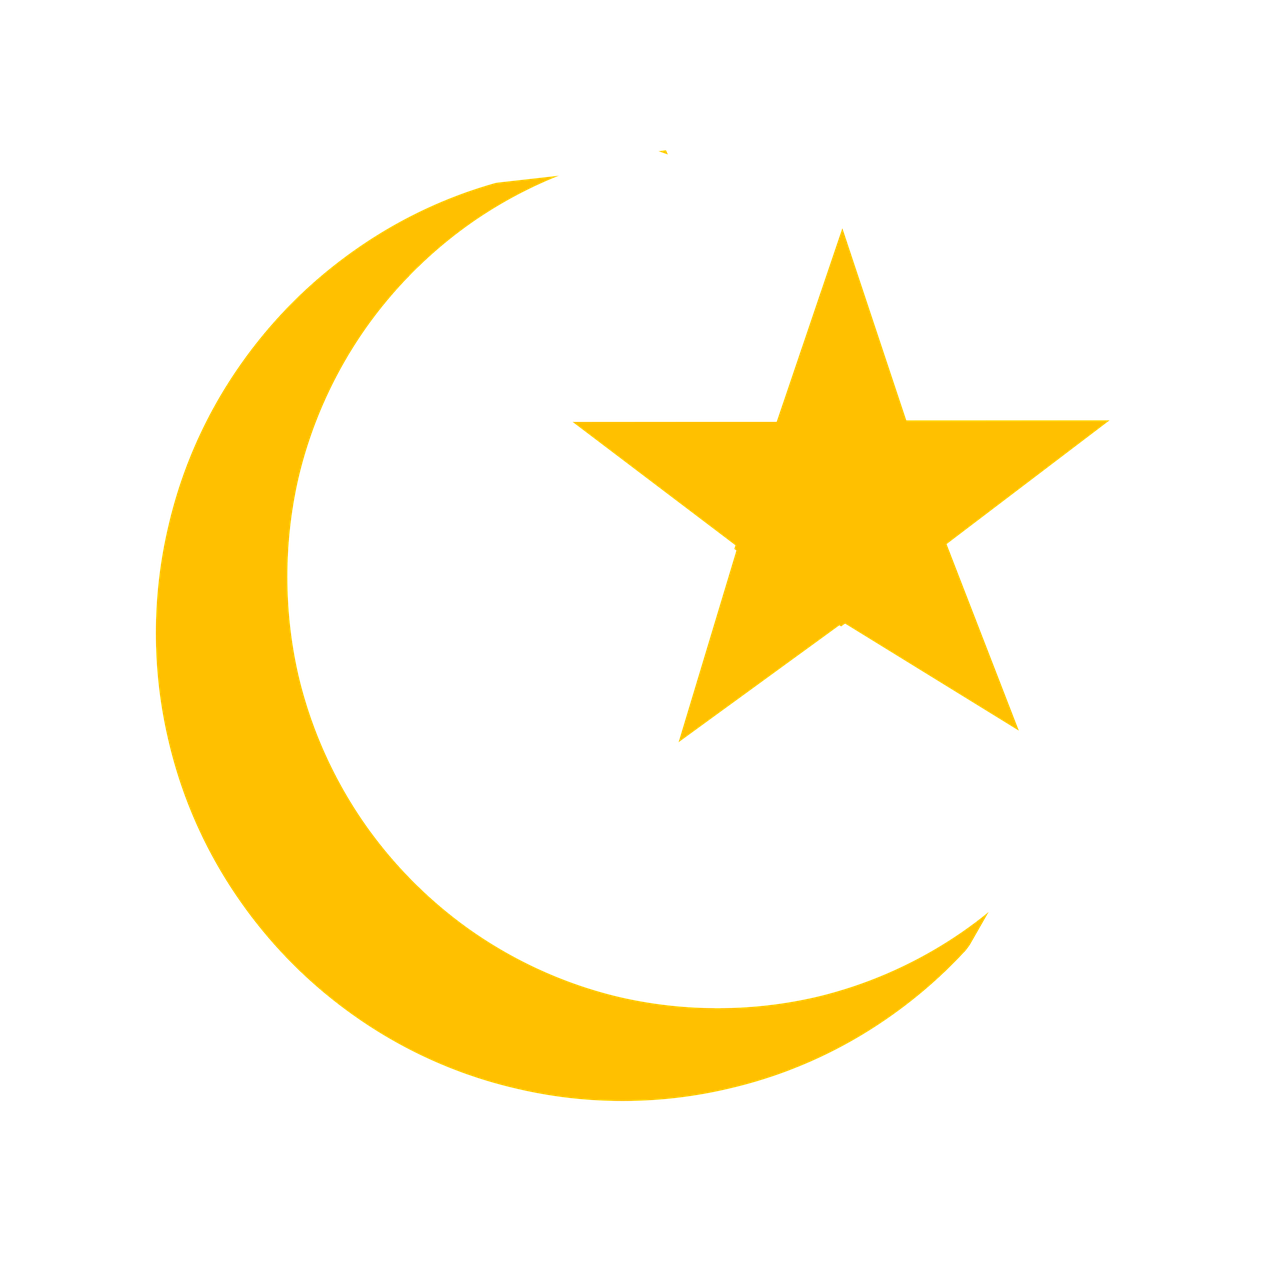 Islamic Crescentand Star Symbol PNG image